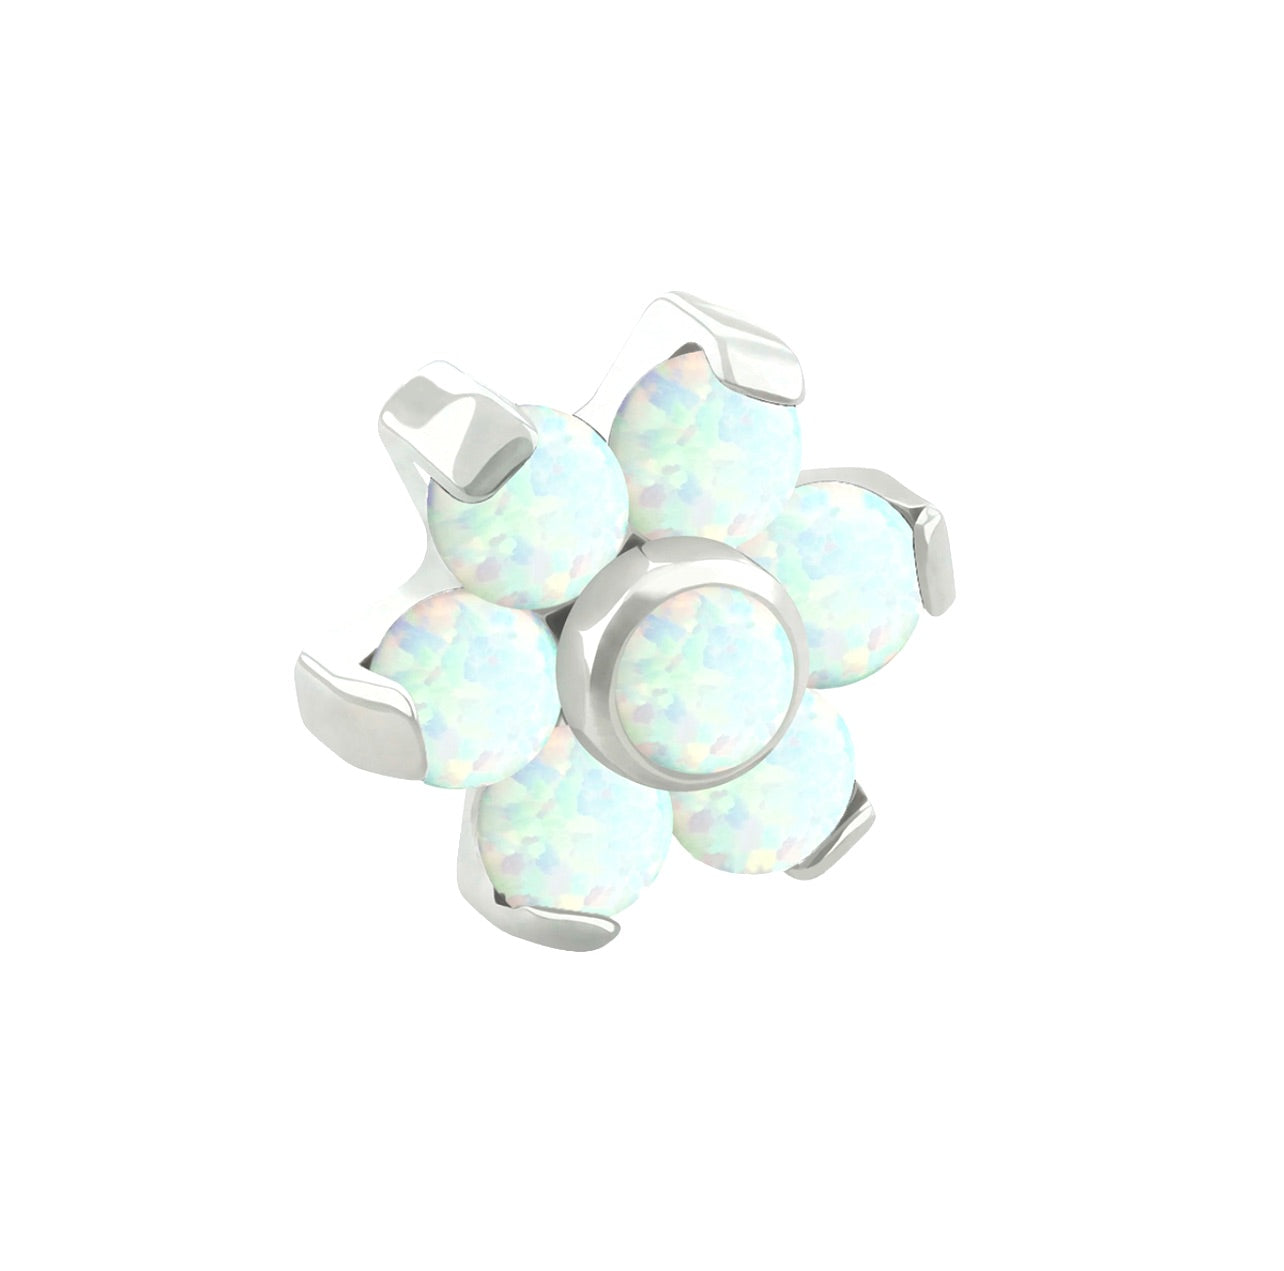 Hexaflower Opal